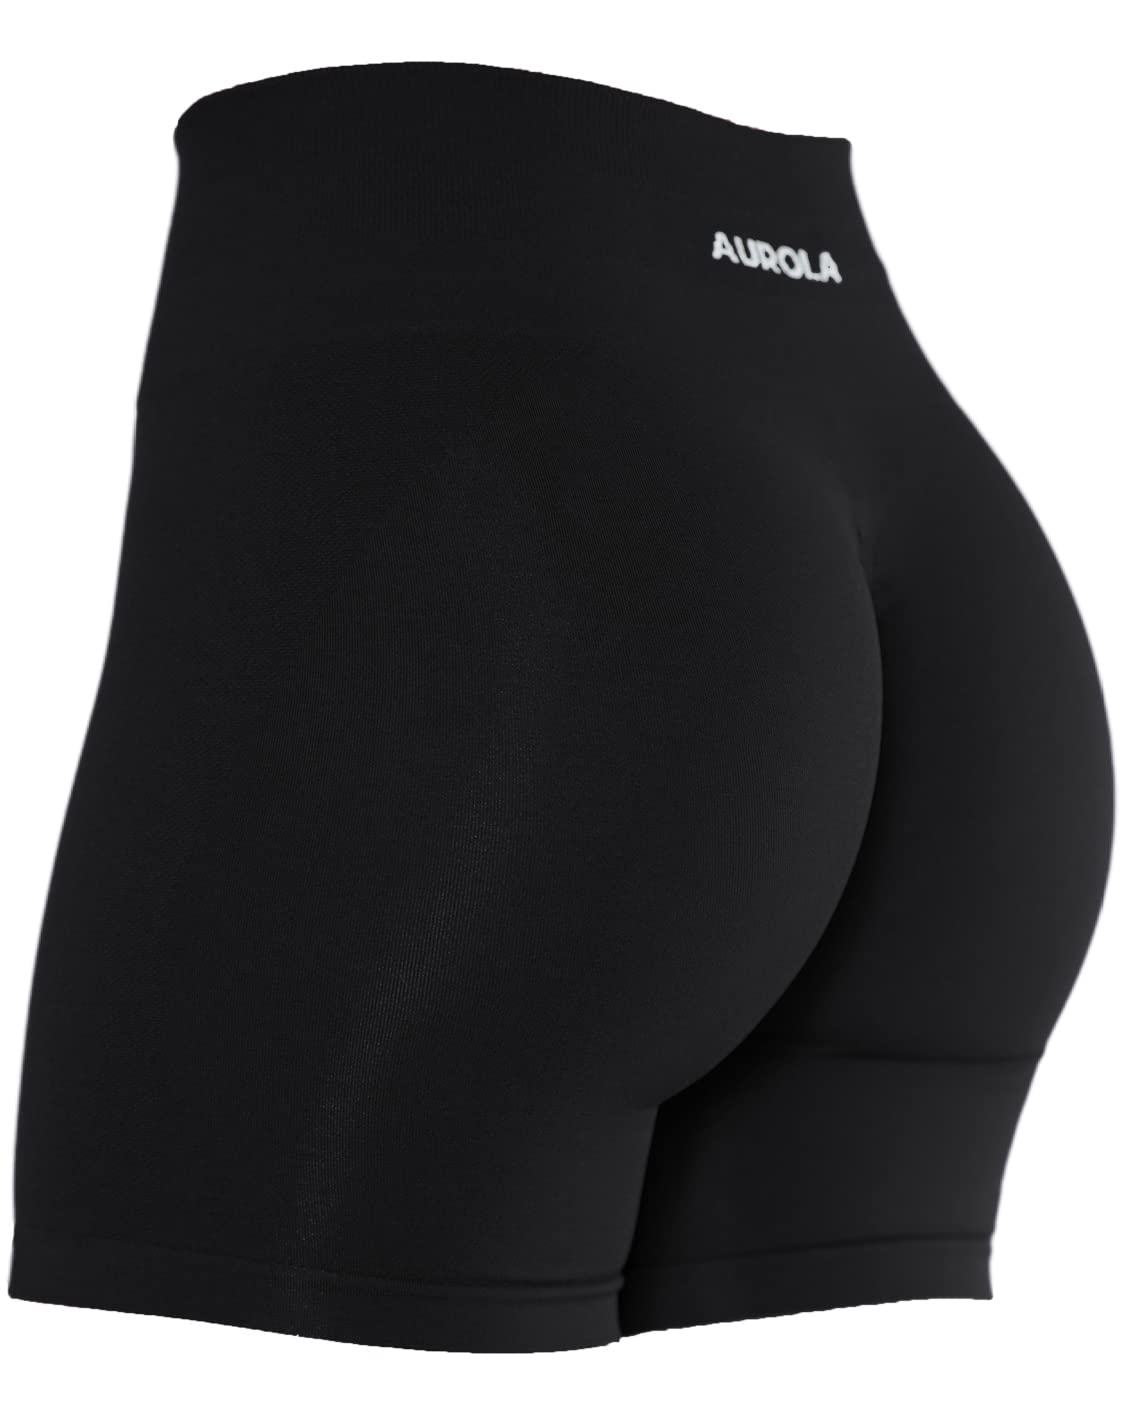 AUROLA CAMO Collection Workout Leggings for Women Subtle Logo Seamless  Scrunch G